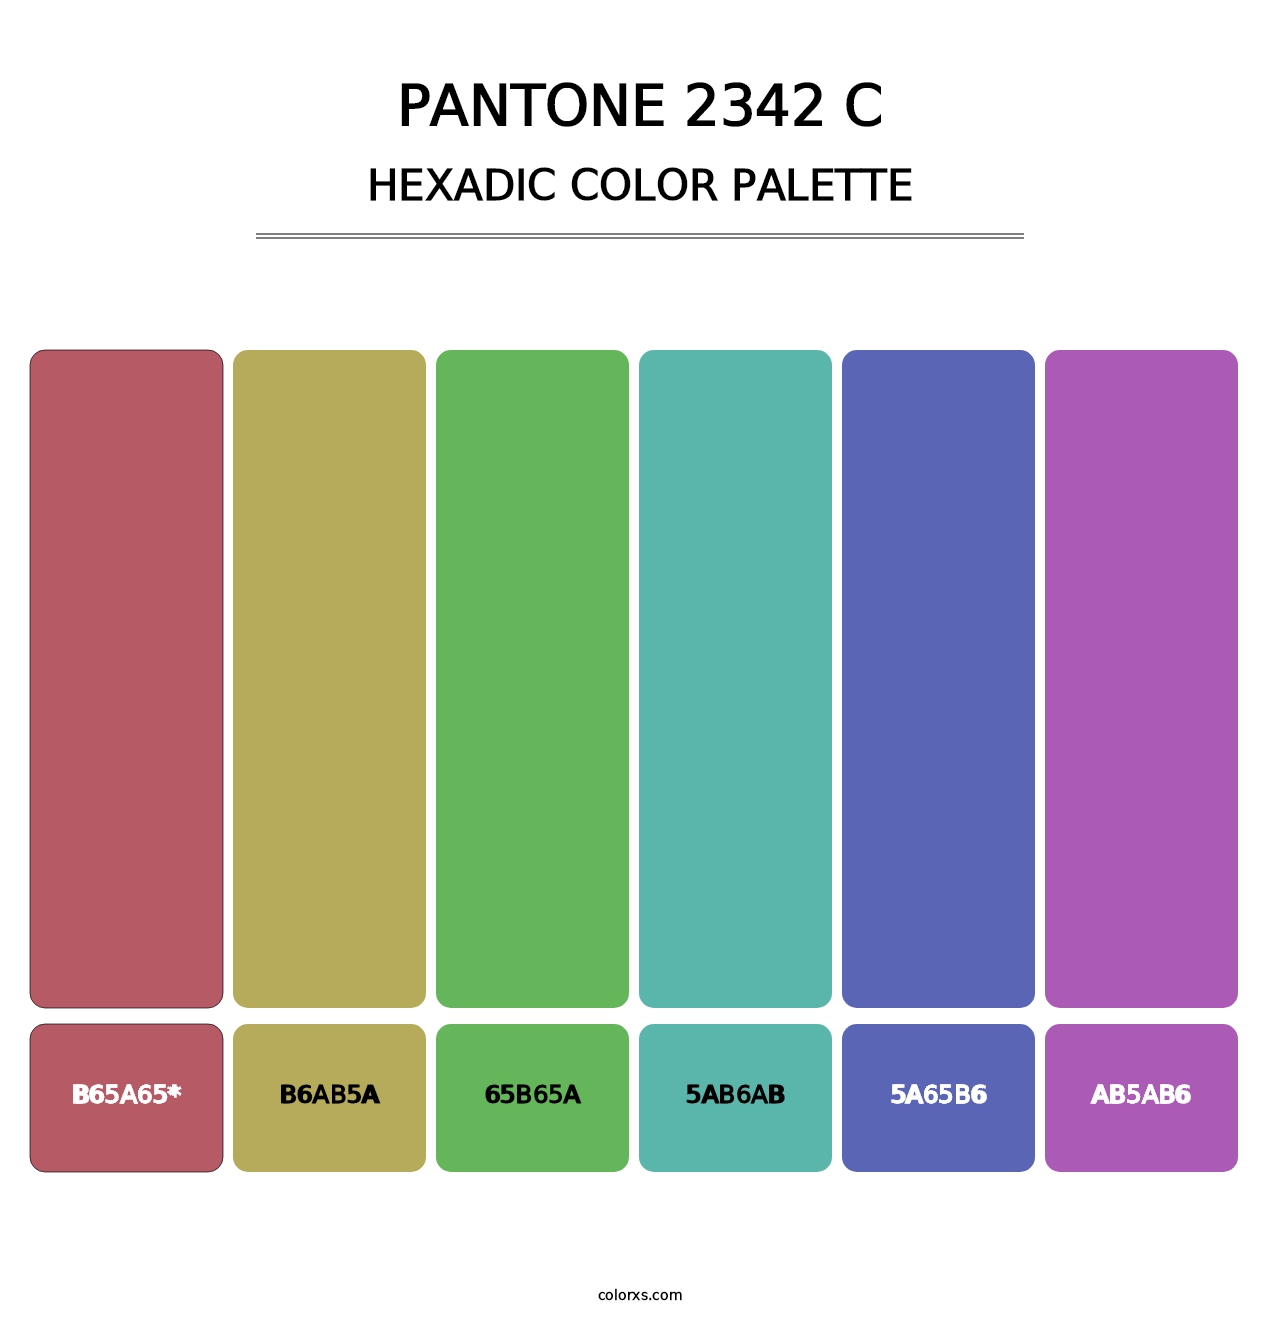 PANTONE 2342 C - Hexadic Color Palette